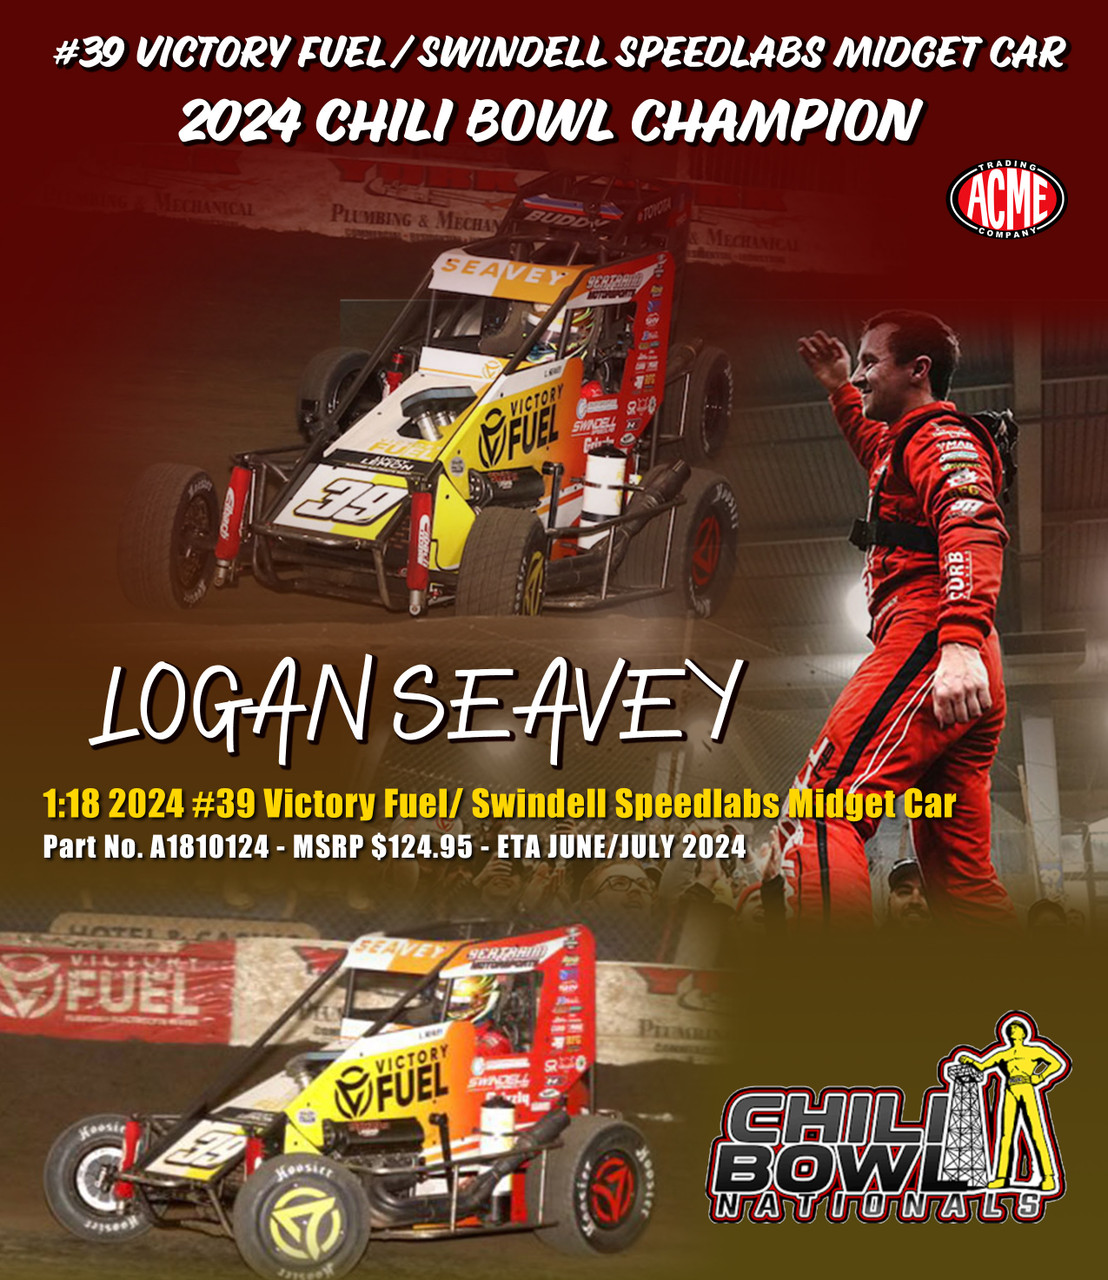 1/18 ACME 2024 #39 Victory Fuel Swindell Speedlabs Midget Car Logan Seavey 2024 Chili Bowl Champion Diecast Car Model